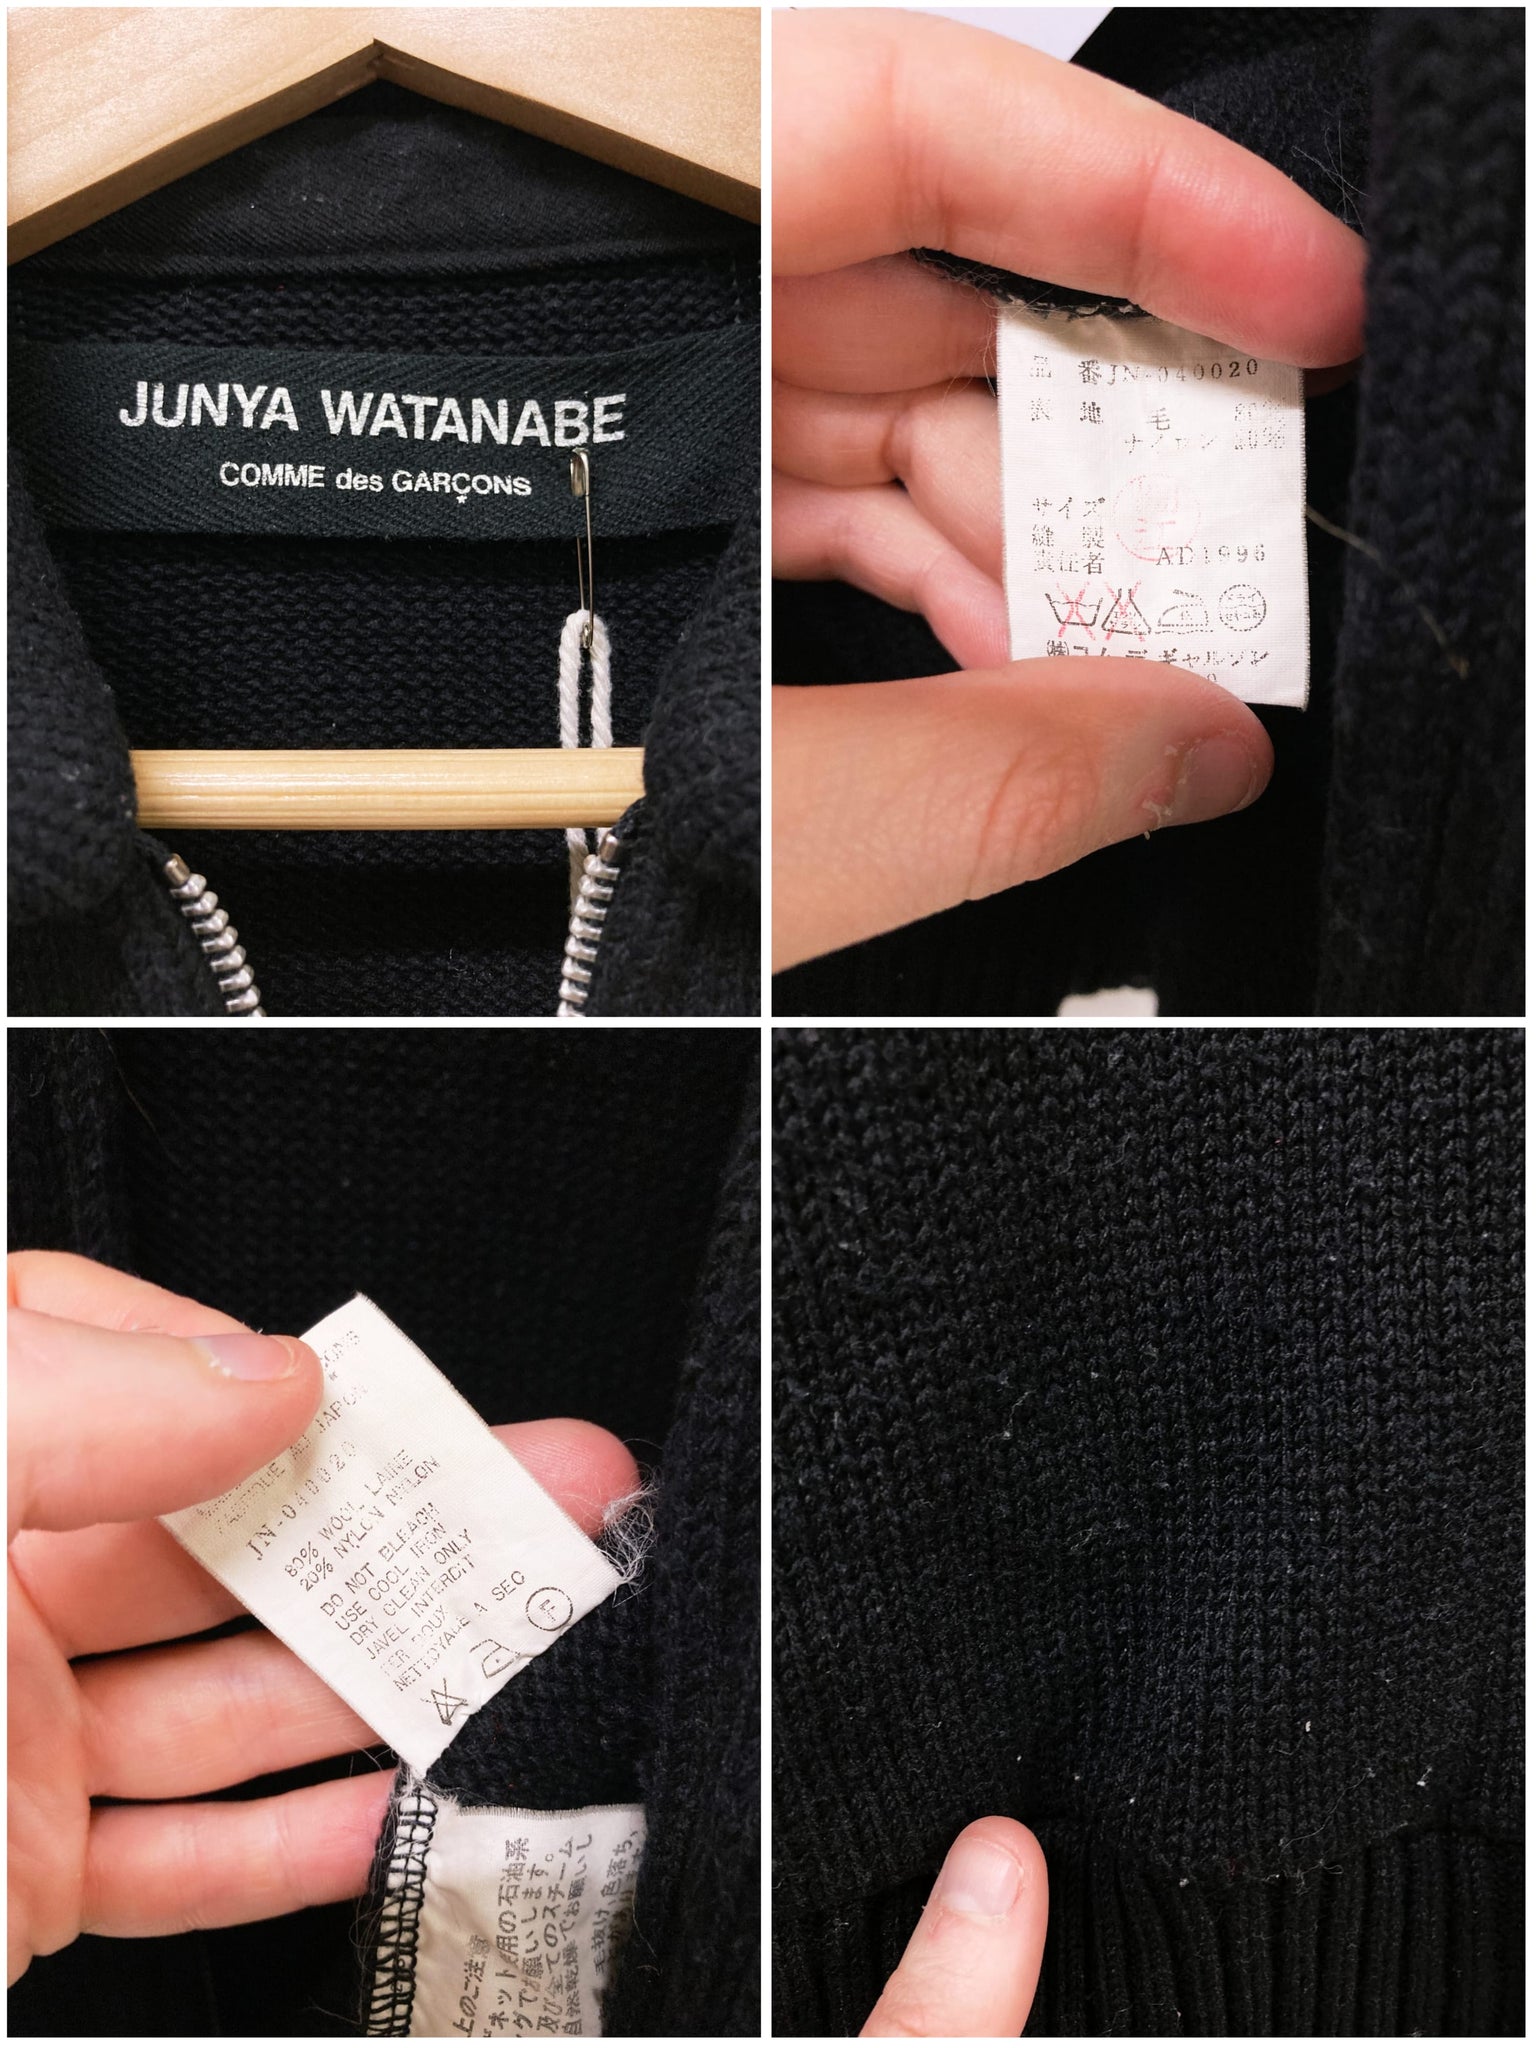 Junya Watanabe Comme des Garcons AW1996 black wool knit jacket